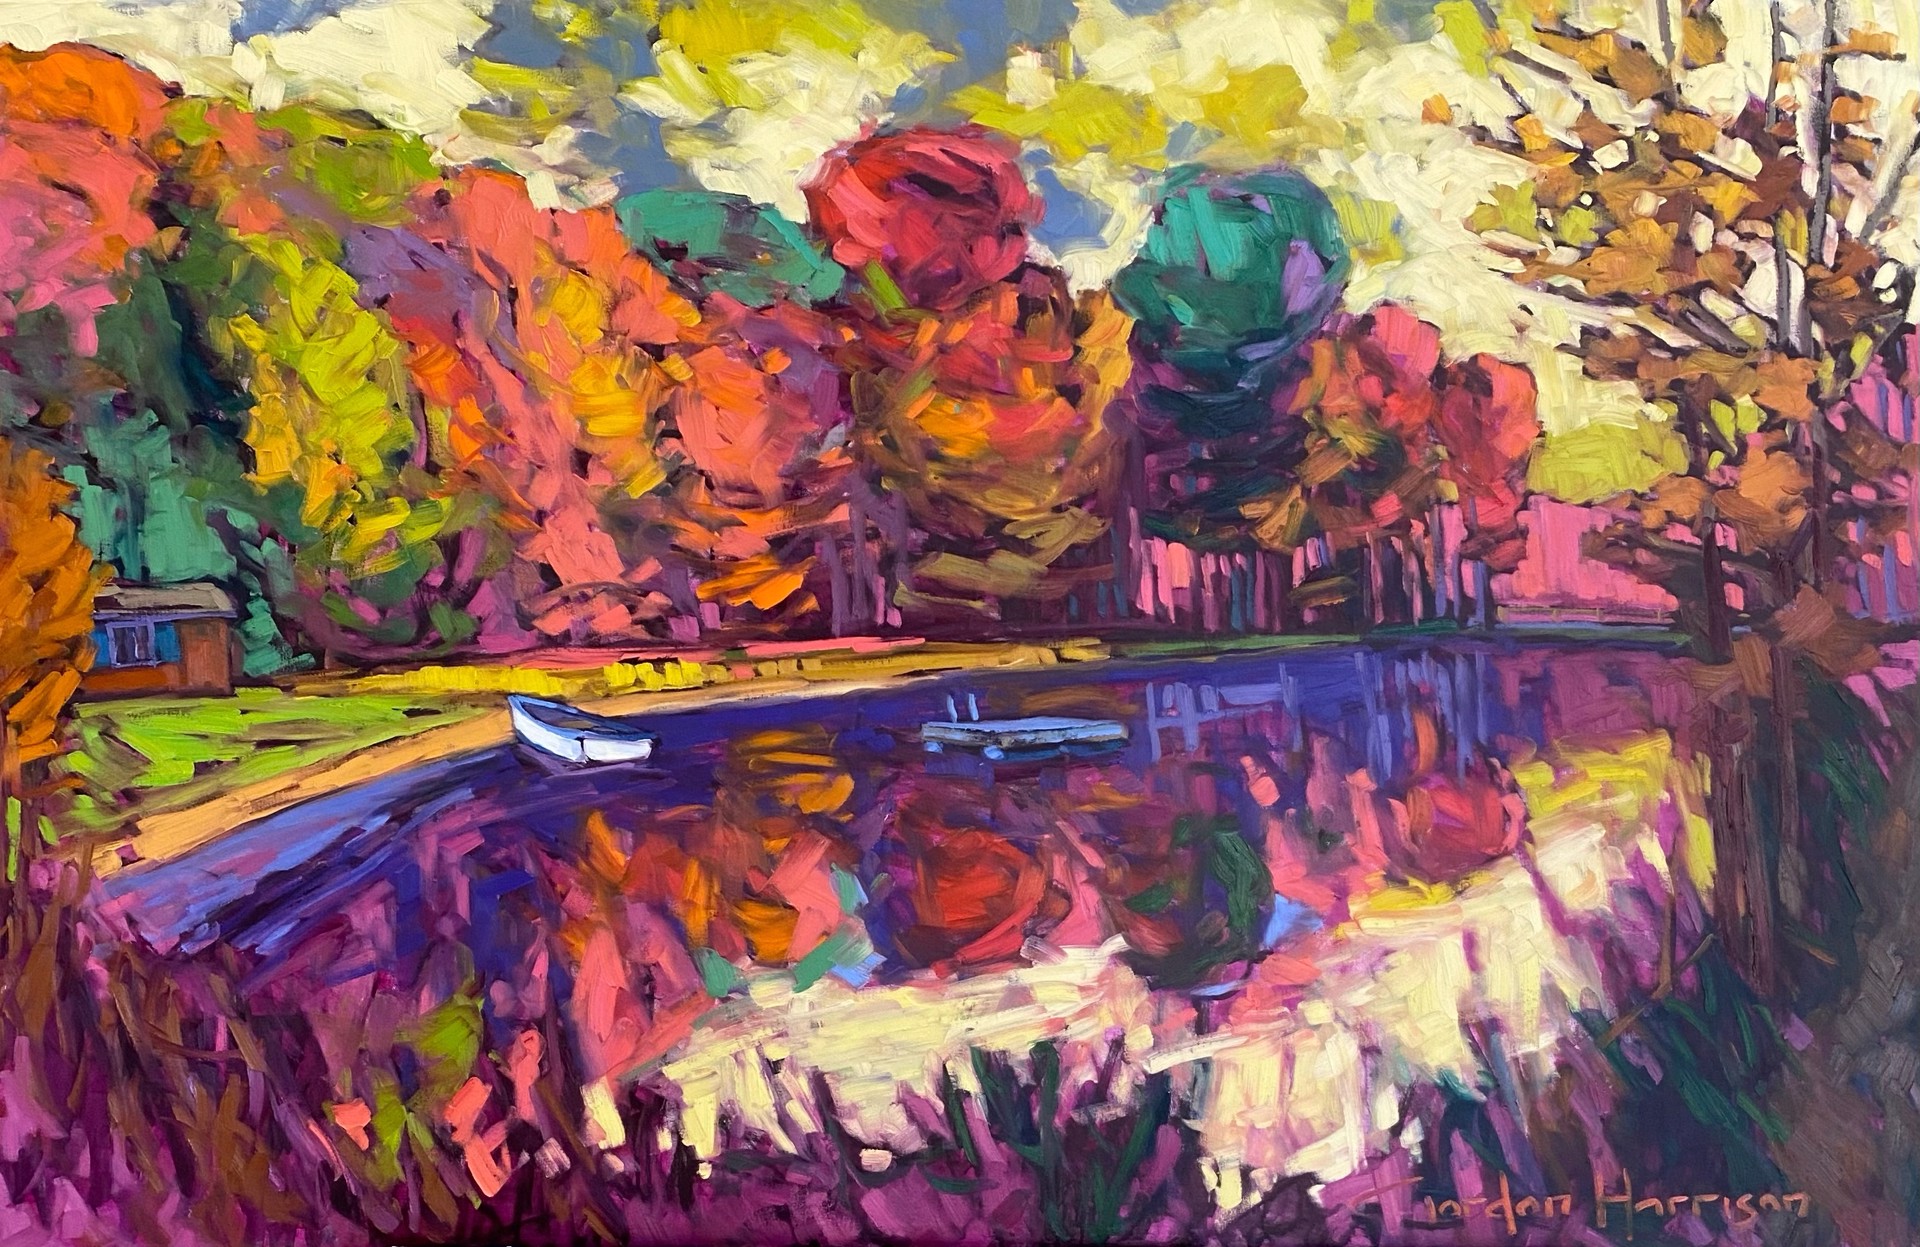 Lisa's Pond by Gordon Harrison